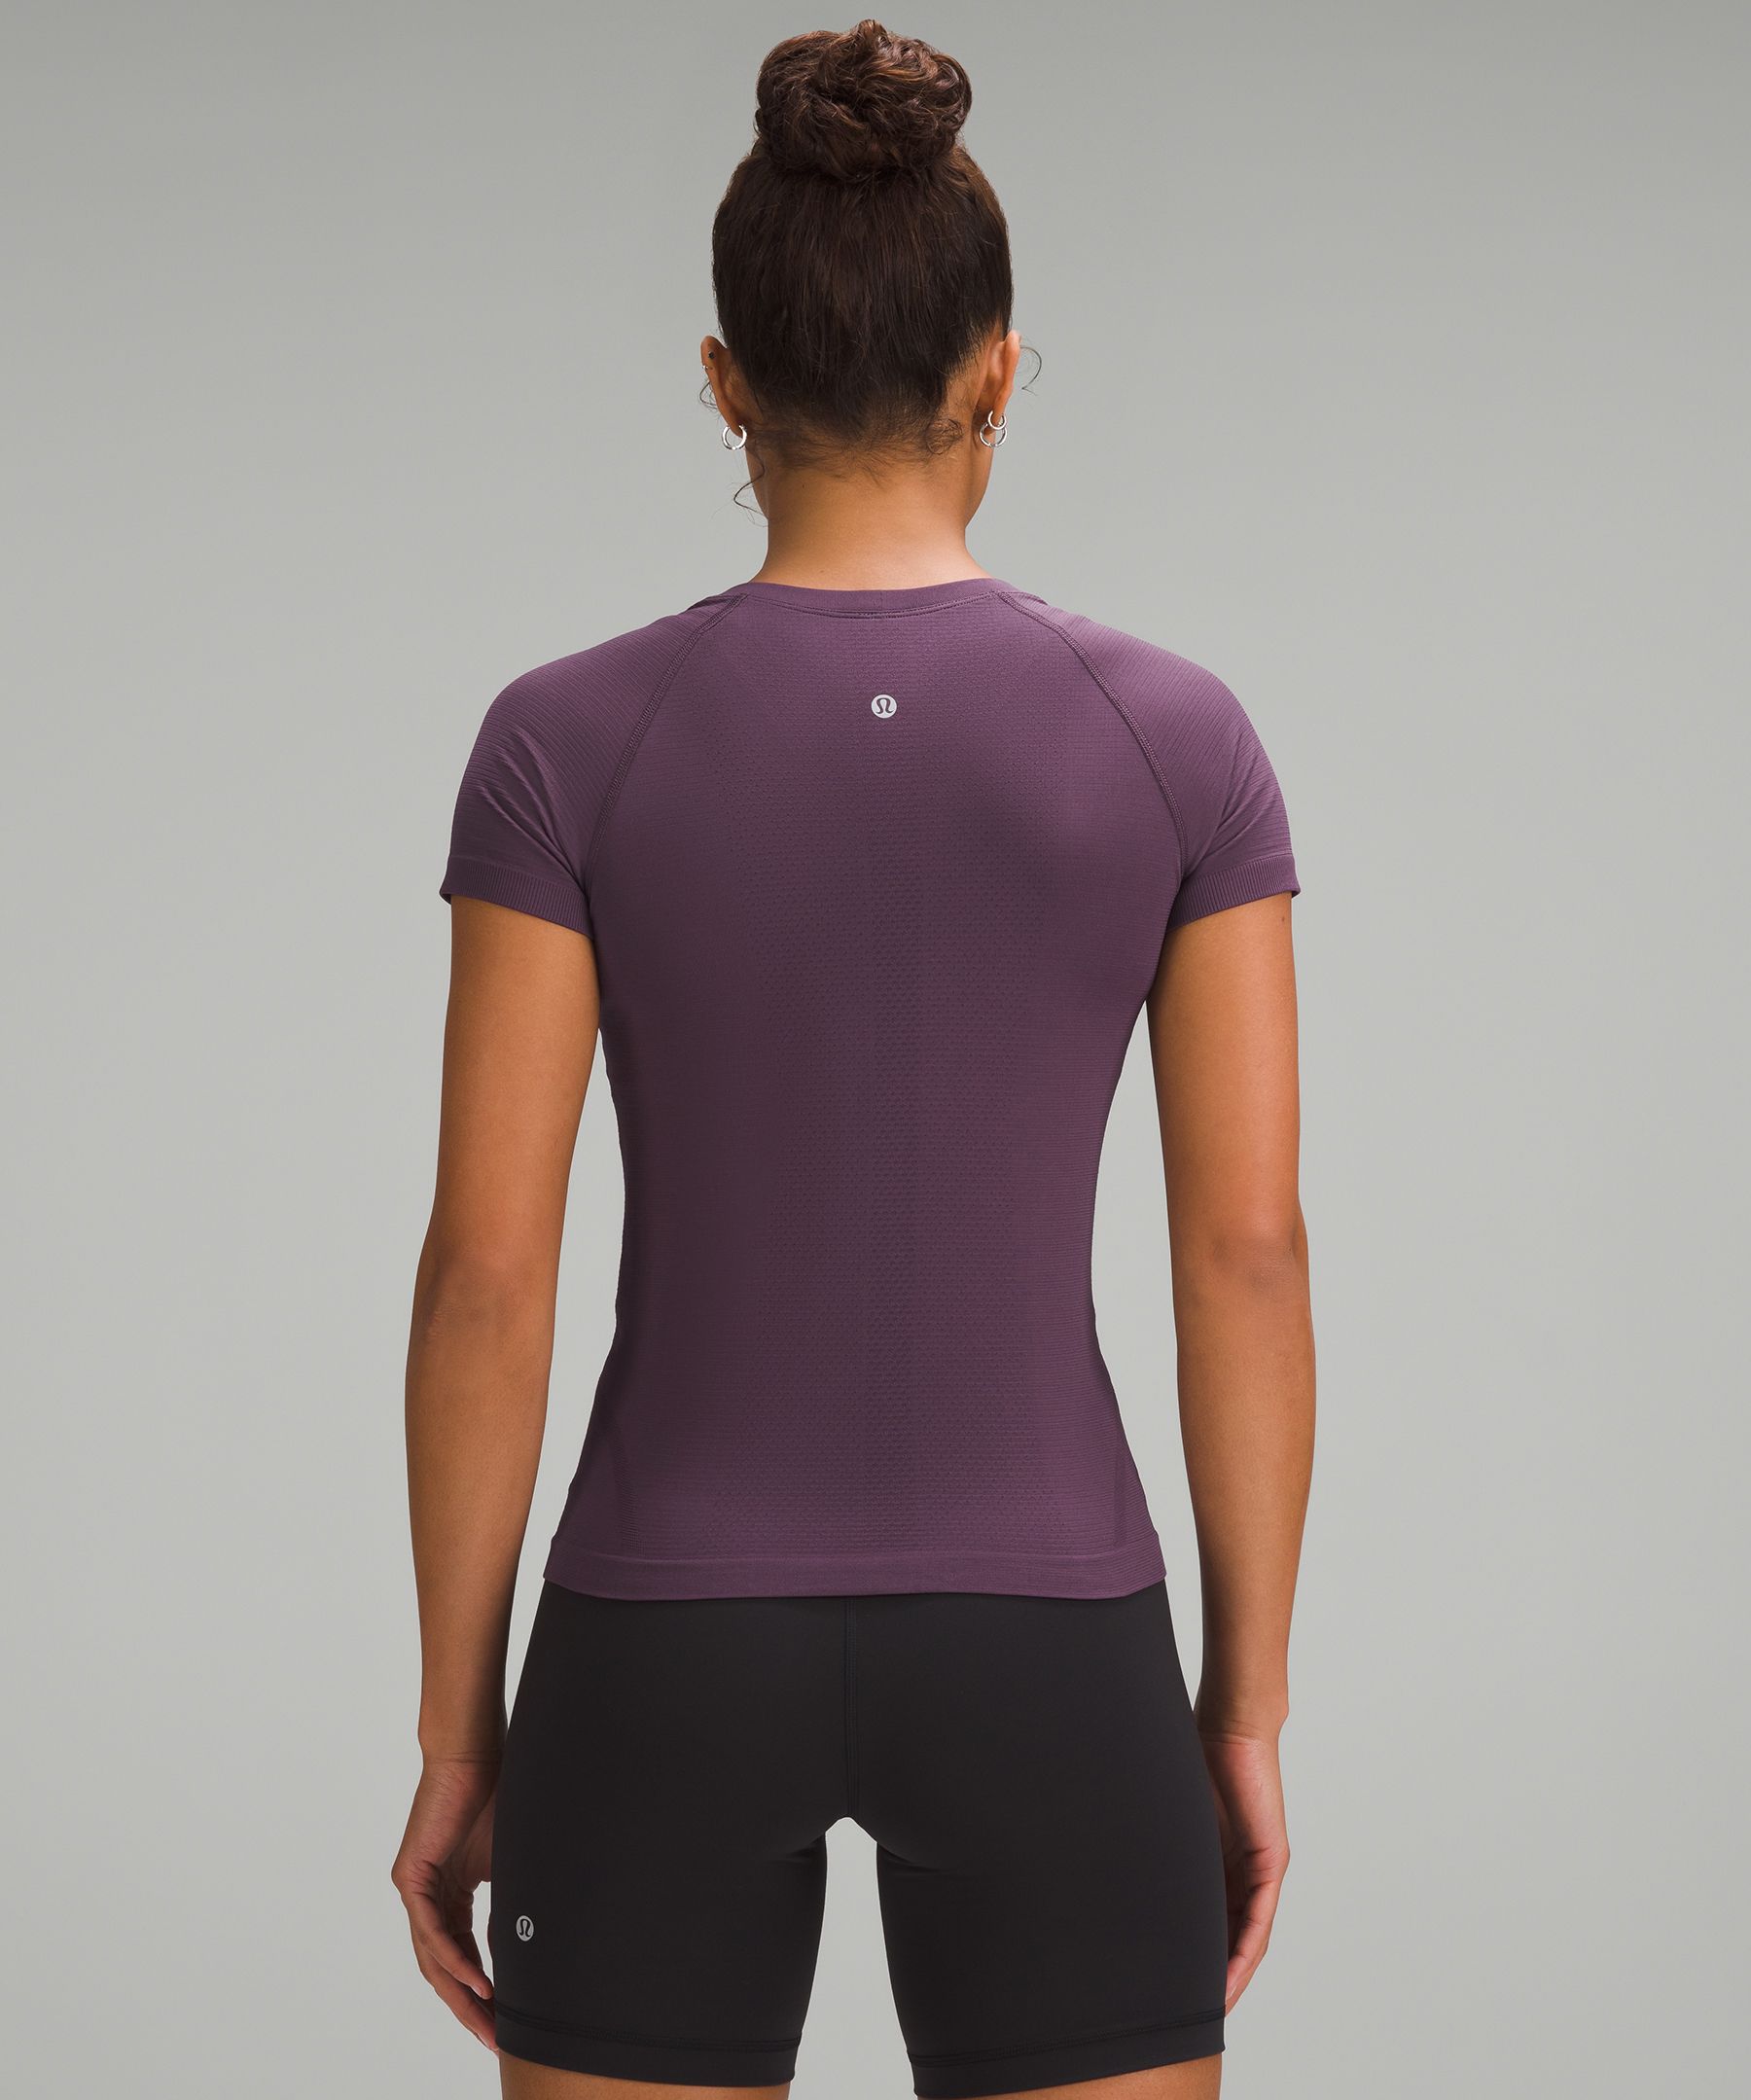 Swiftly Tech Short-Sleeve Shirt 2.0 *Race Length